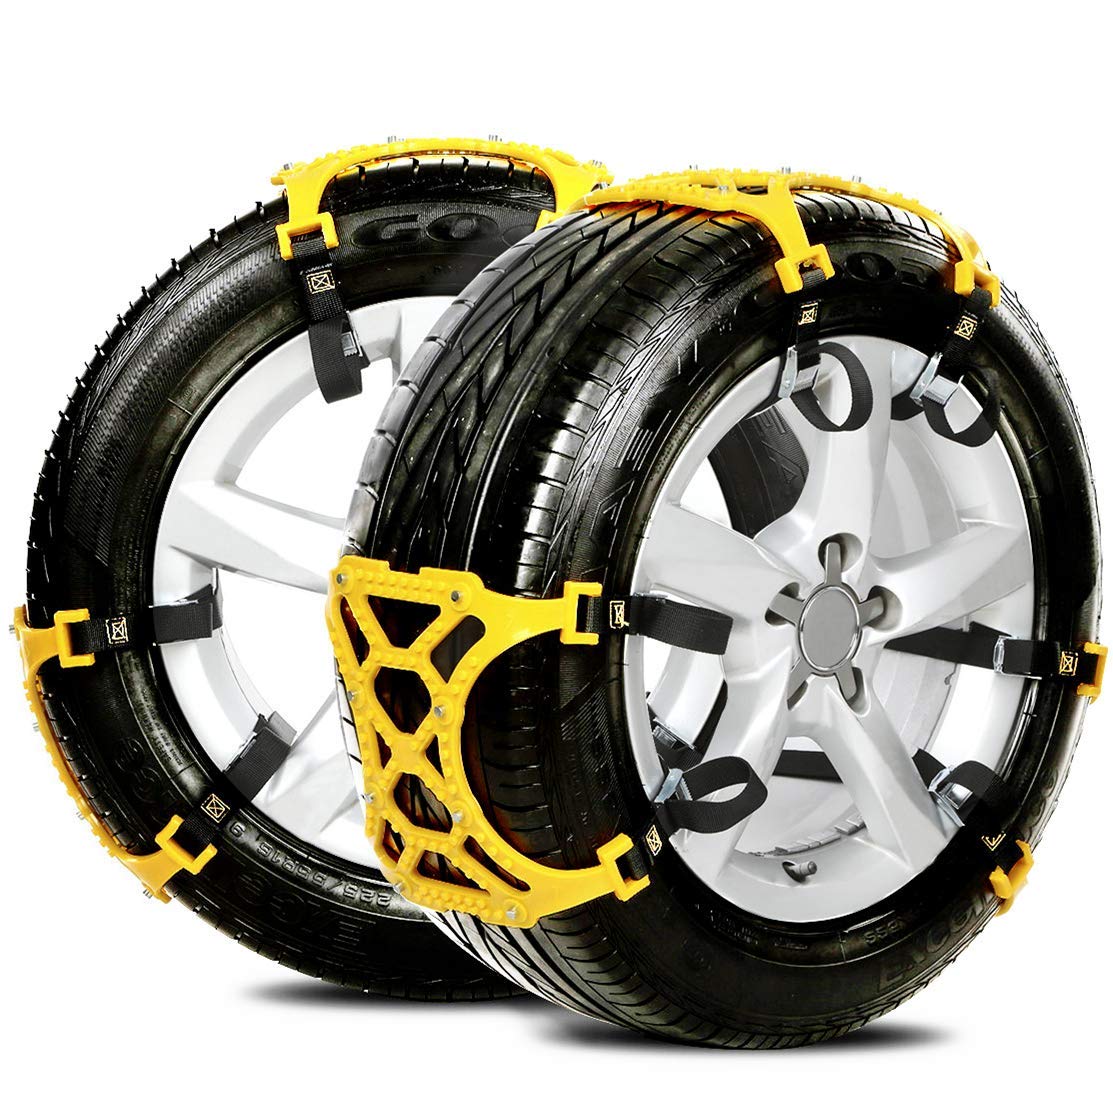 MATCC Tire Snow Chains Anti Slip Tire Chains Safety India